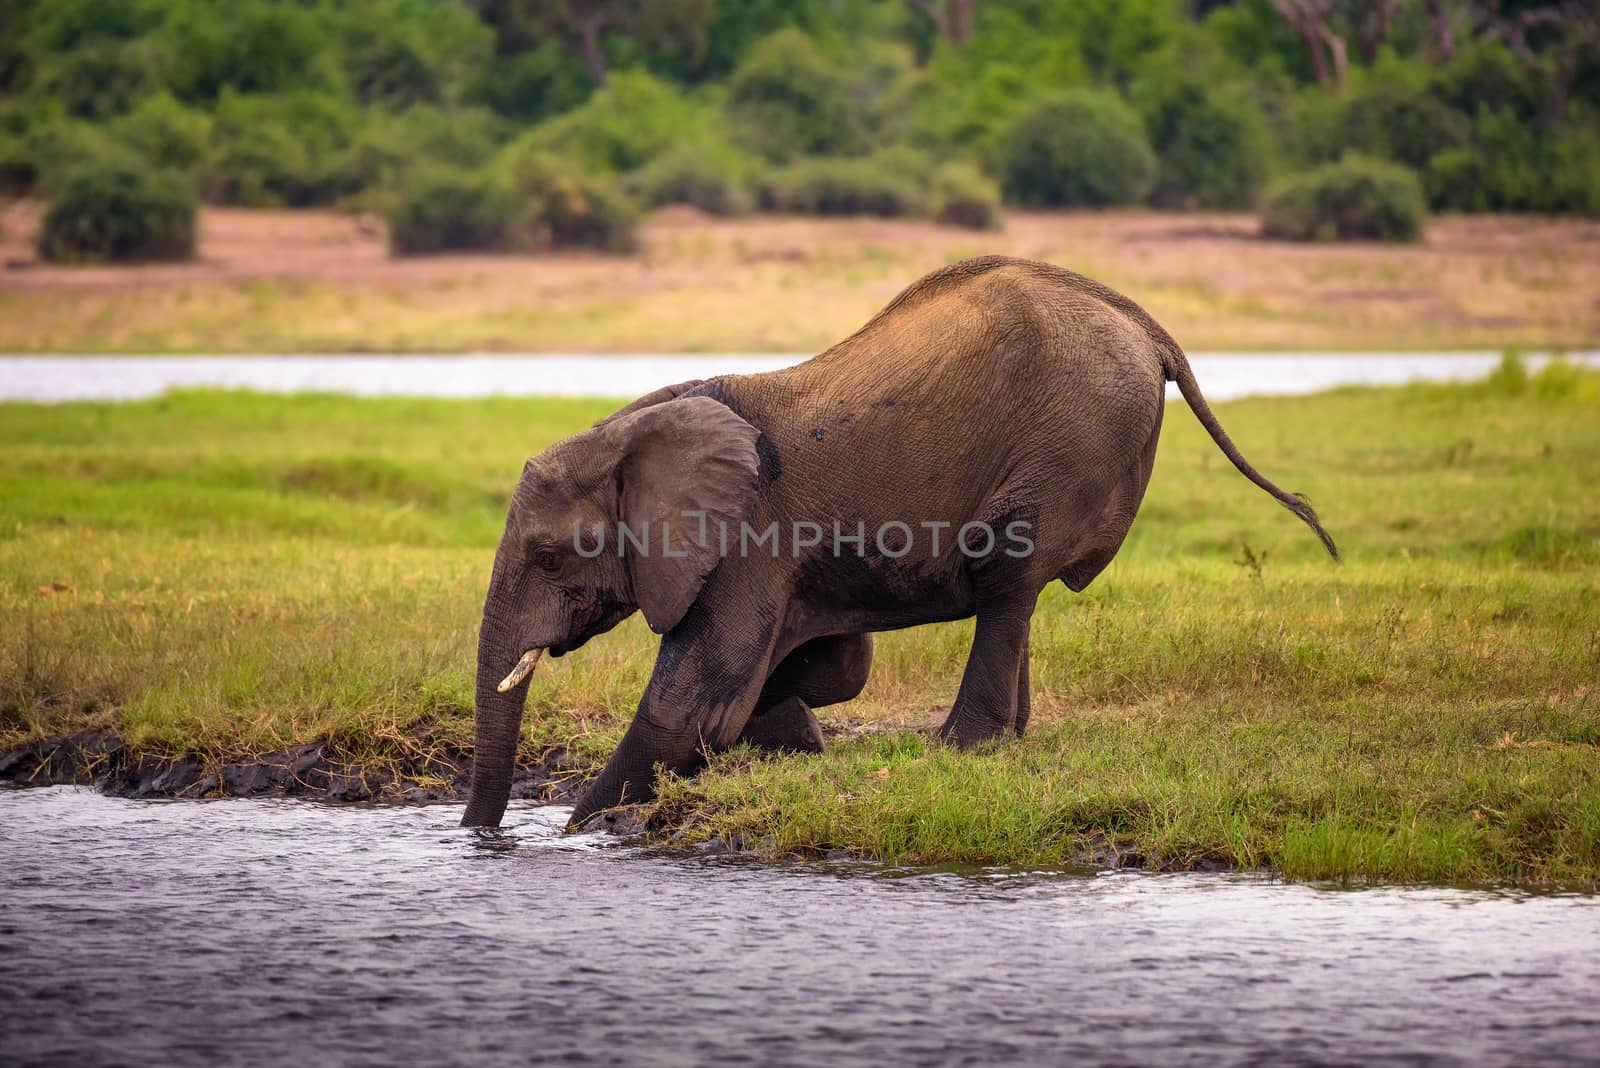 Elephant crossing the Chobe River in Chobe National Park, Botswana by nickfox